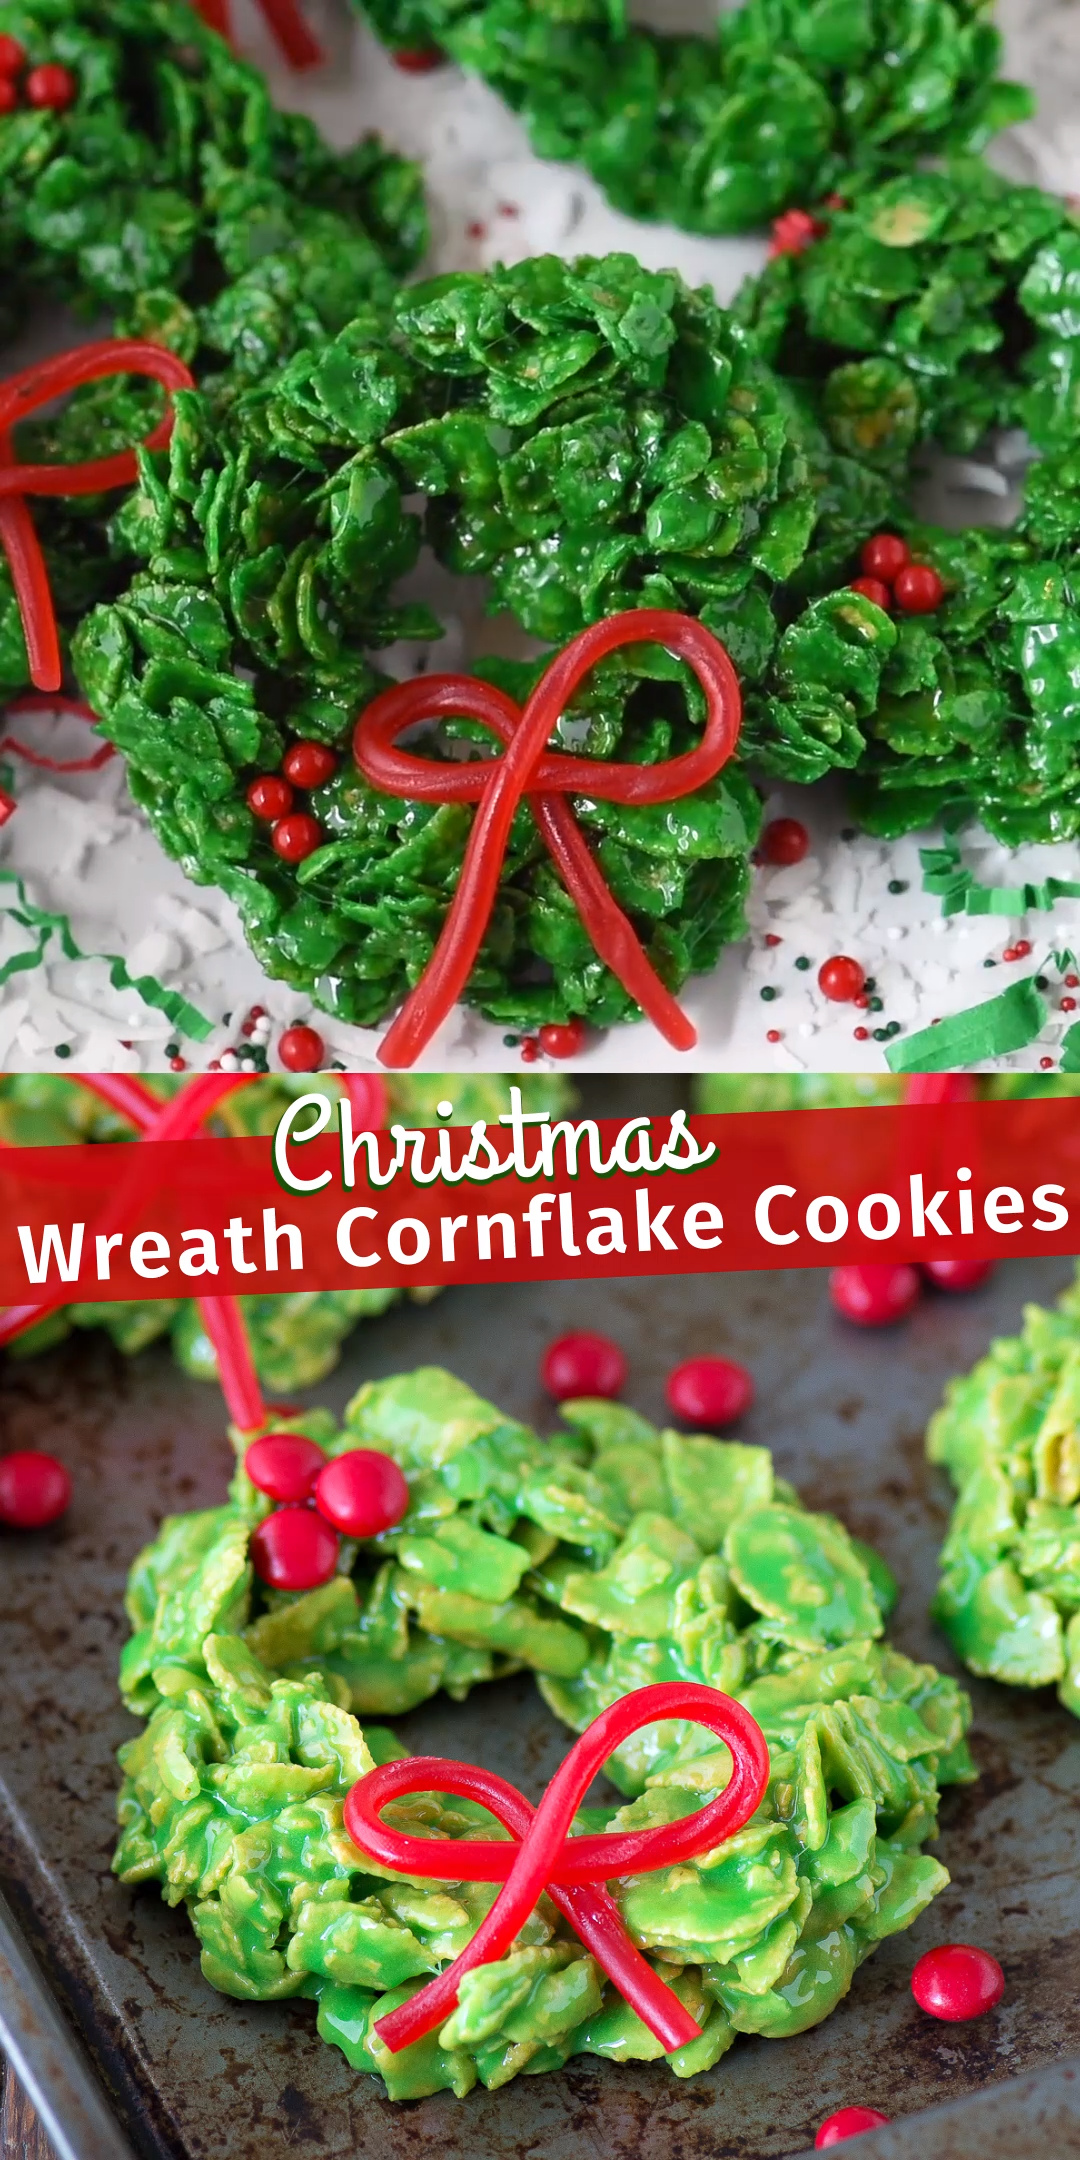 Christmas Wreath Cornflake Cookies -   12 holiday Wreaths corn flakes ideas